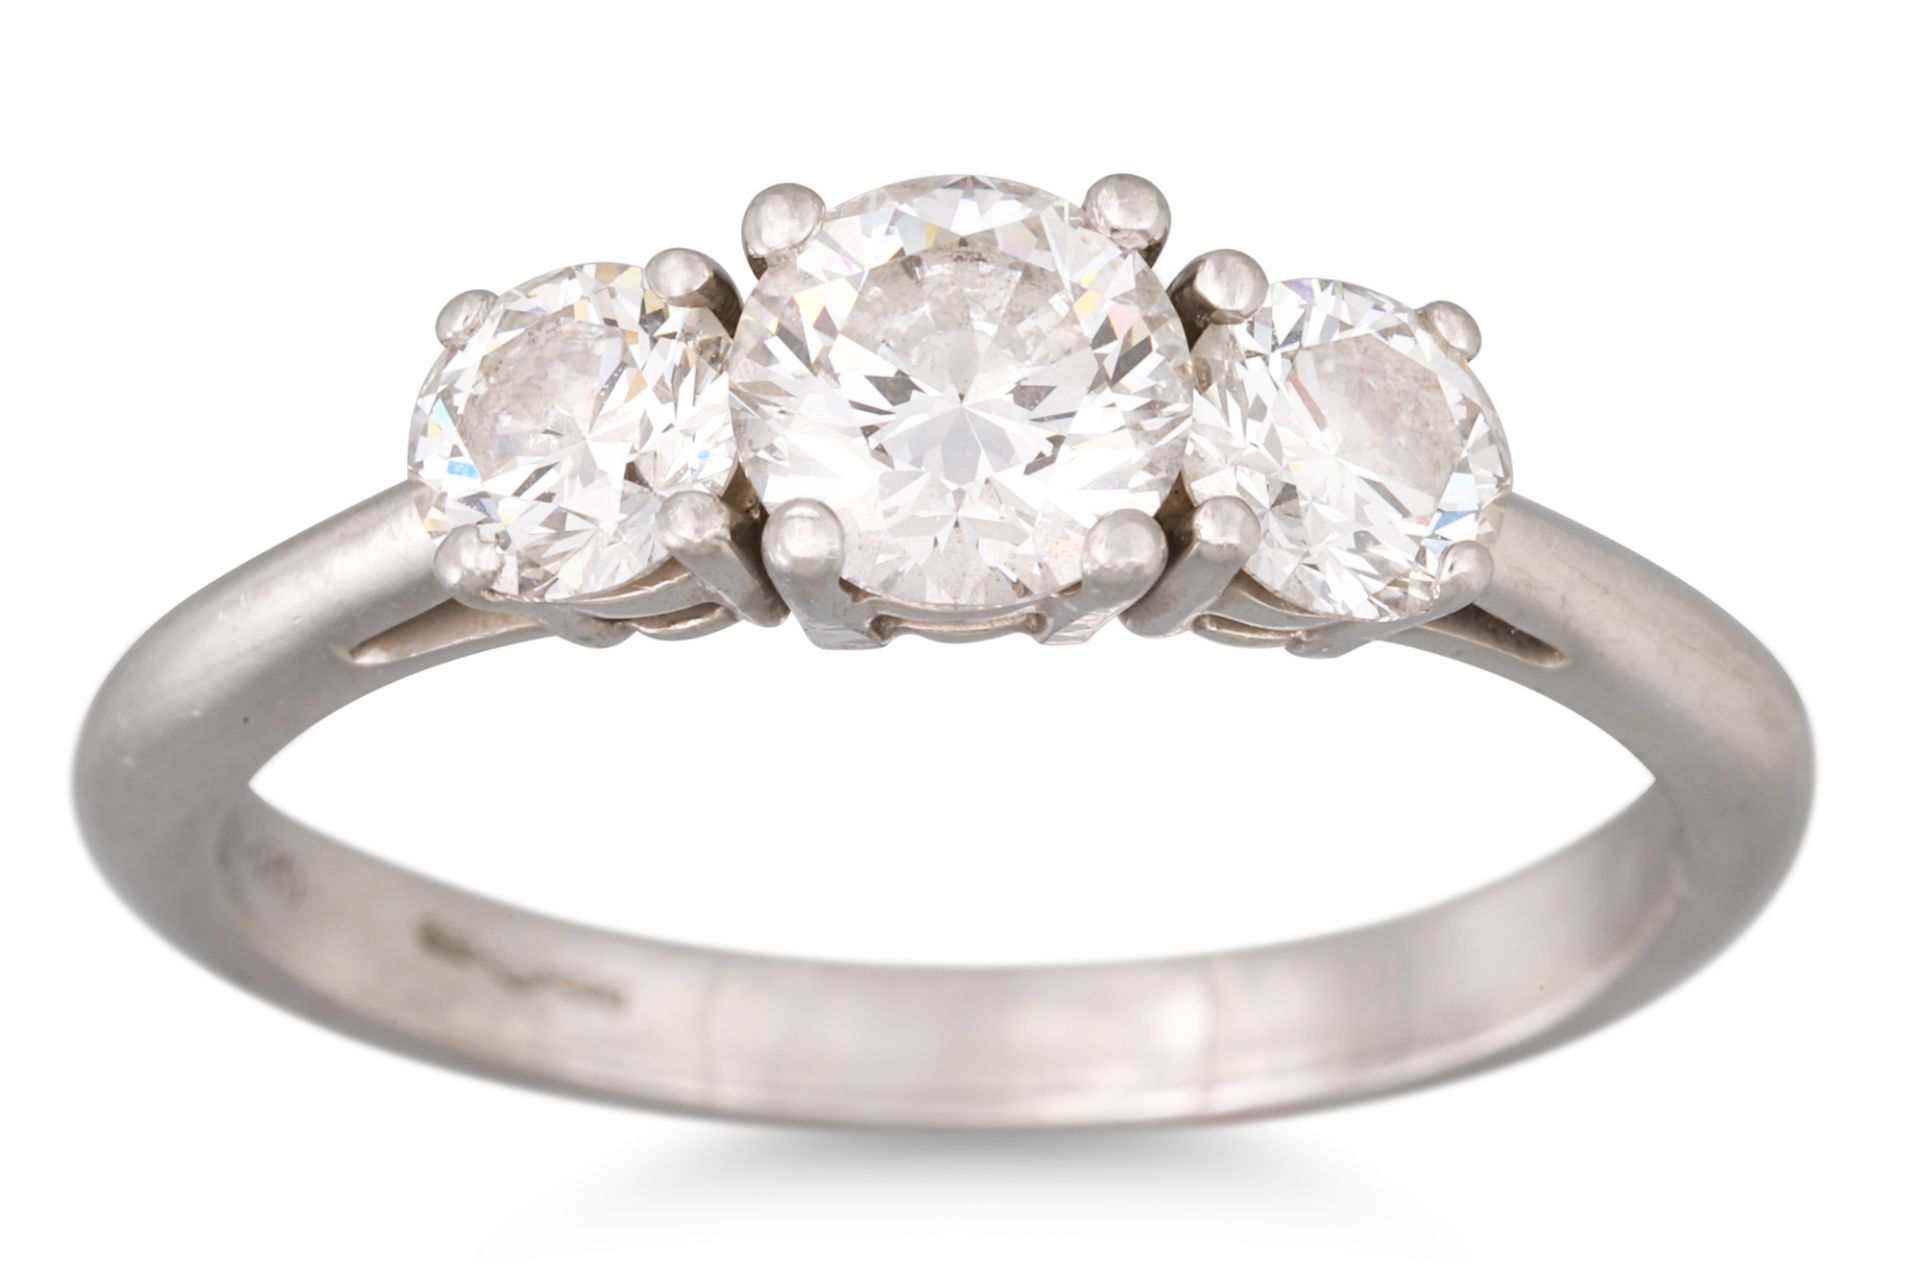 A THREE STONE DIAMOND RING, BY TIFFANY & CO., the brilliant cut diamonds mounted in platinum.